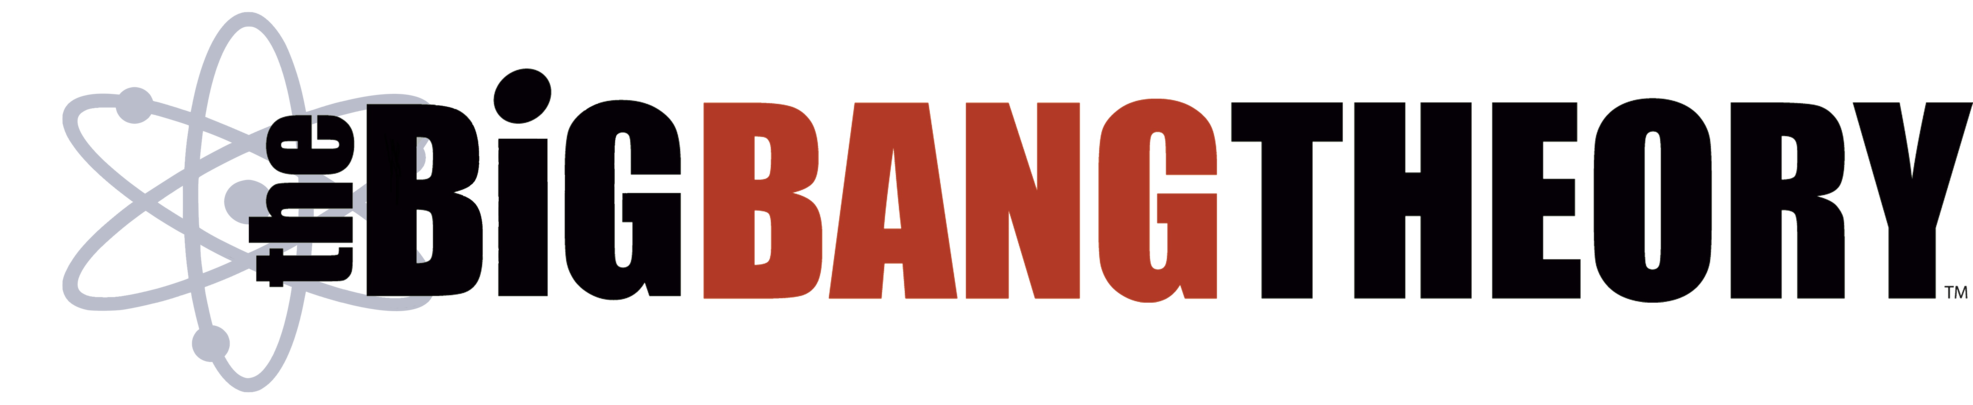 Logo teori big bang Gambar Transparan